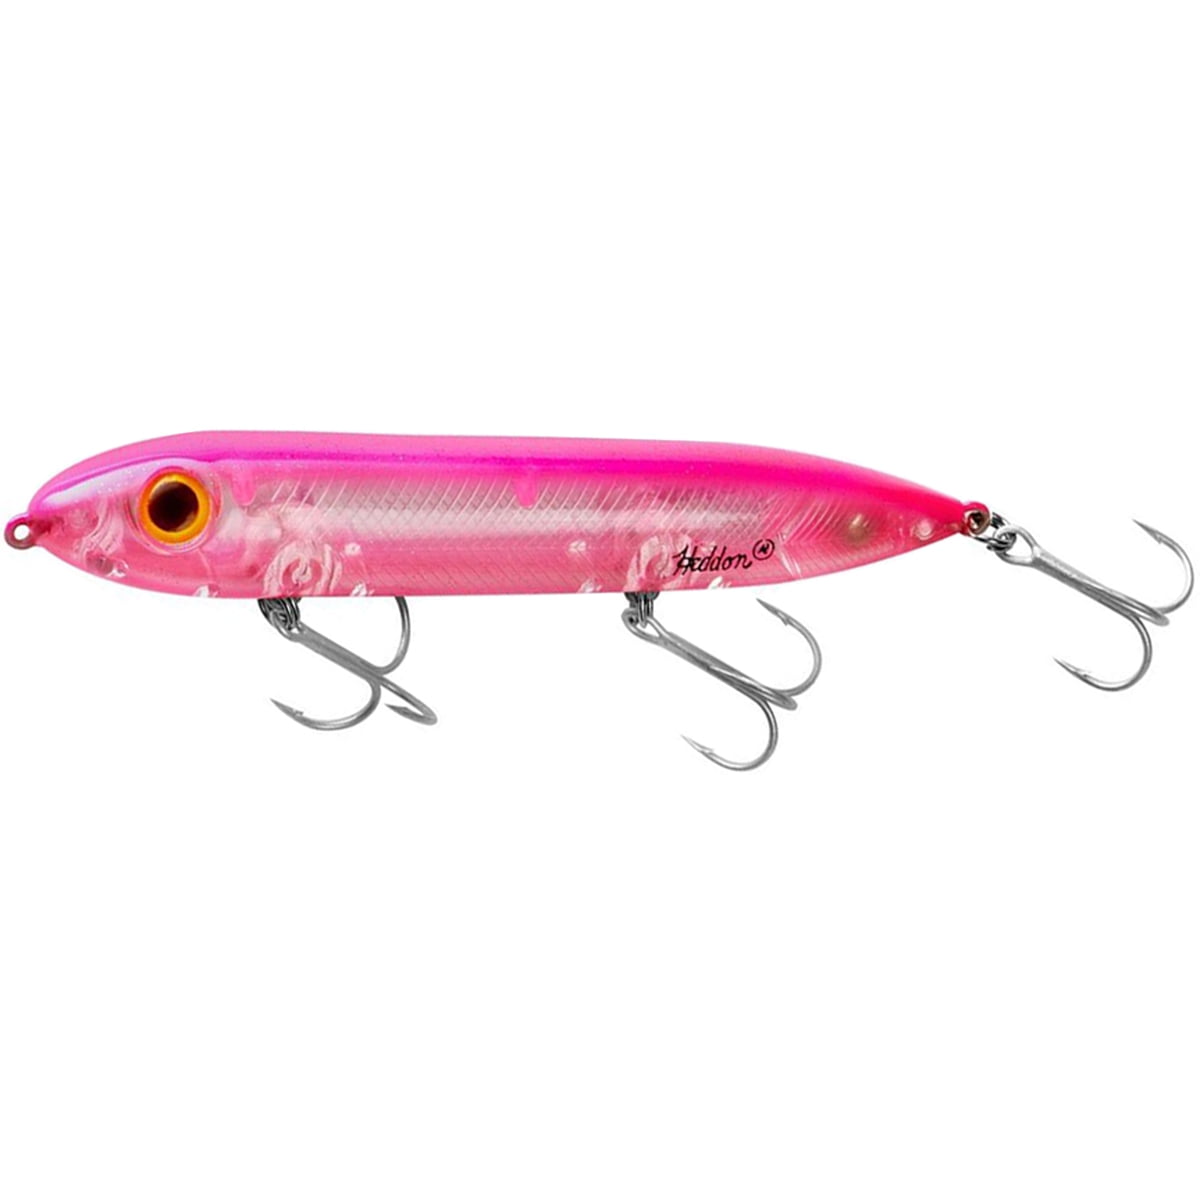 Heddon Super Spook 7/8 oz Saltwater Fishing Lure - Pink/Silver